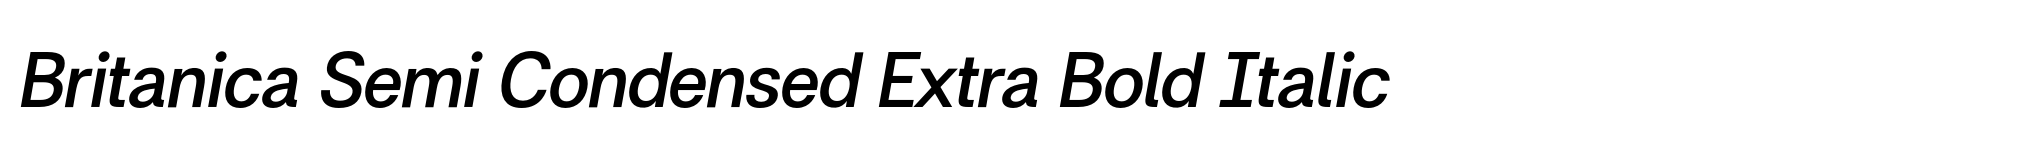 Britanica Semi Condensed Extra Bold Italic image